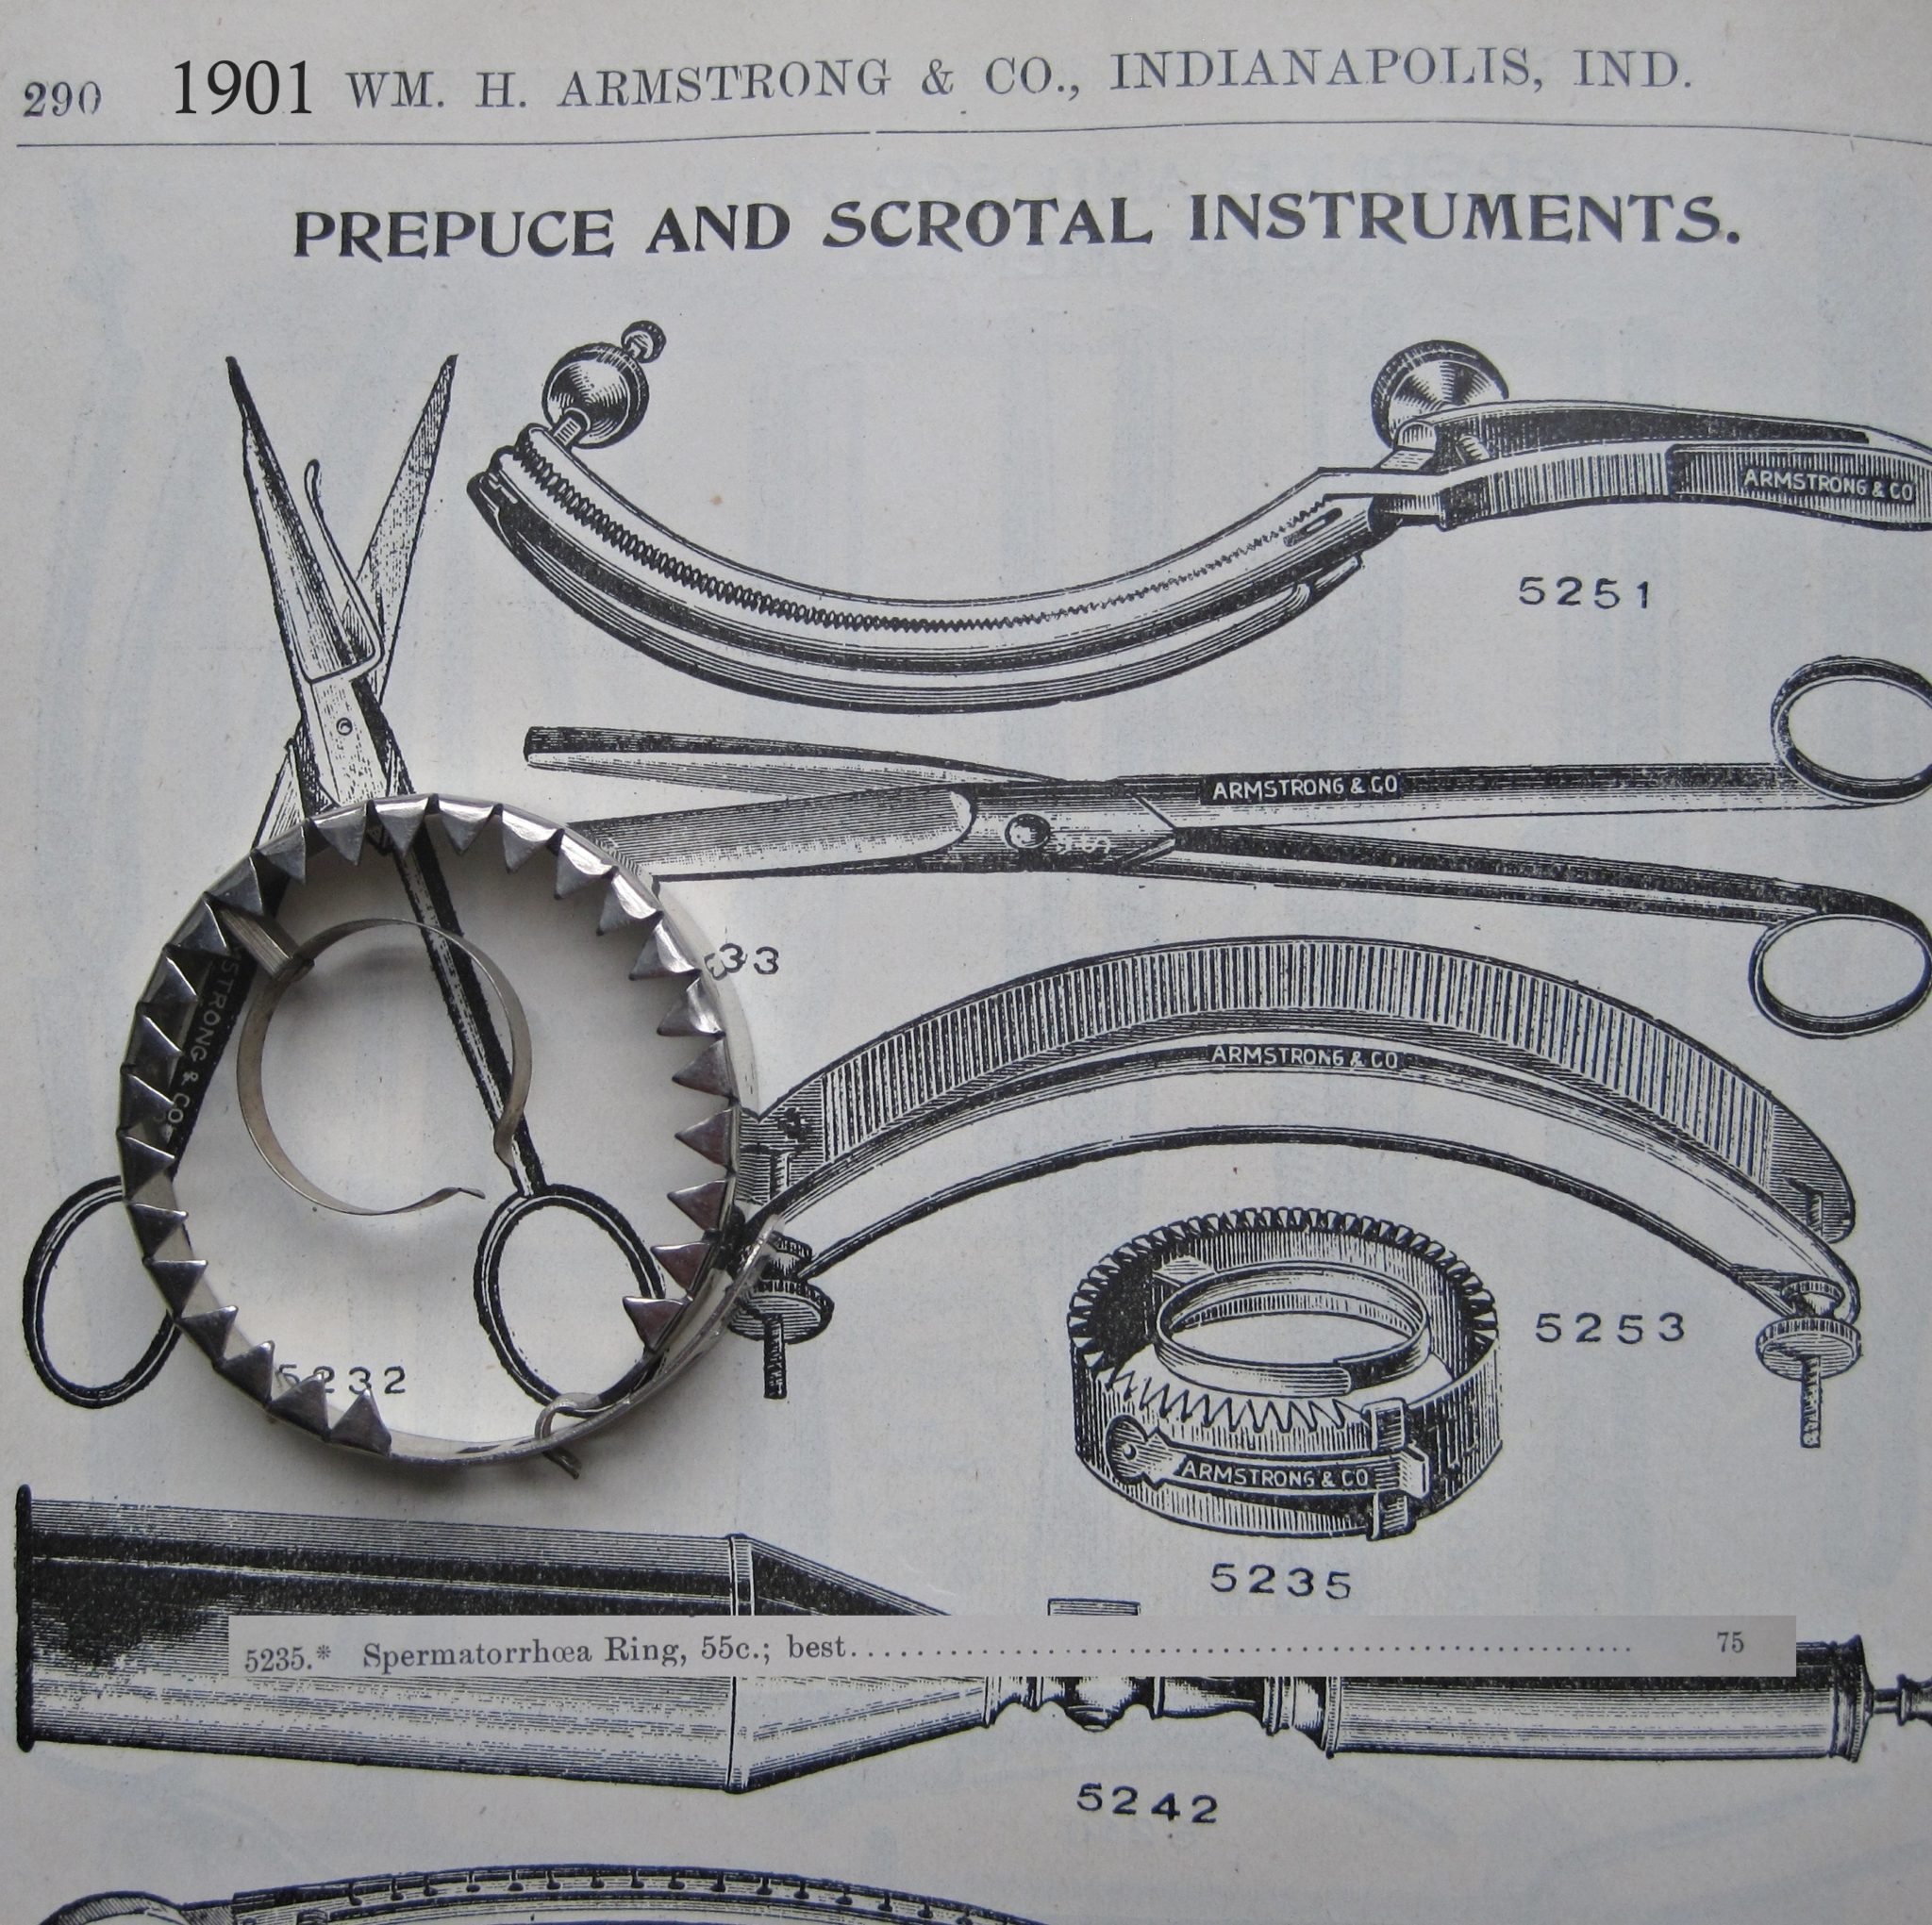 Spermatorrhea Ring used to Prevent Masturbation and Nocturnal Emission